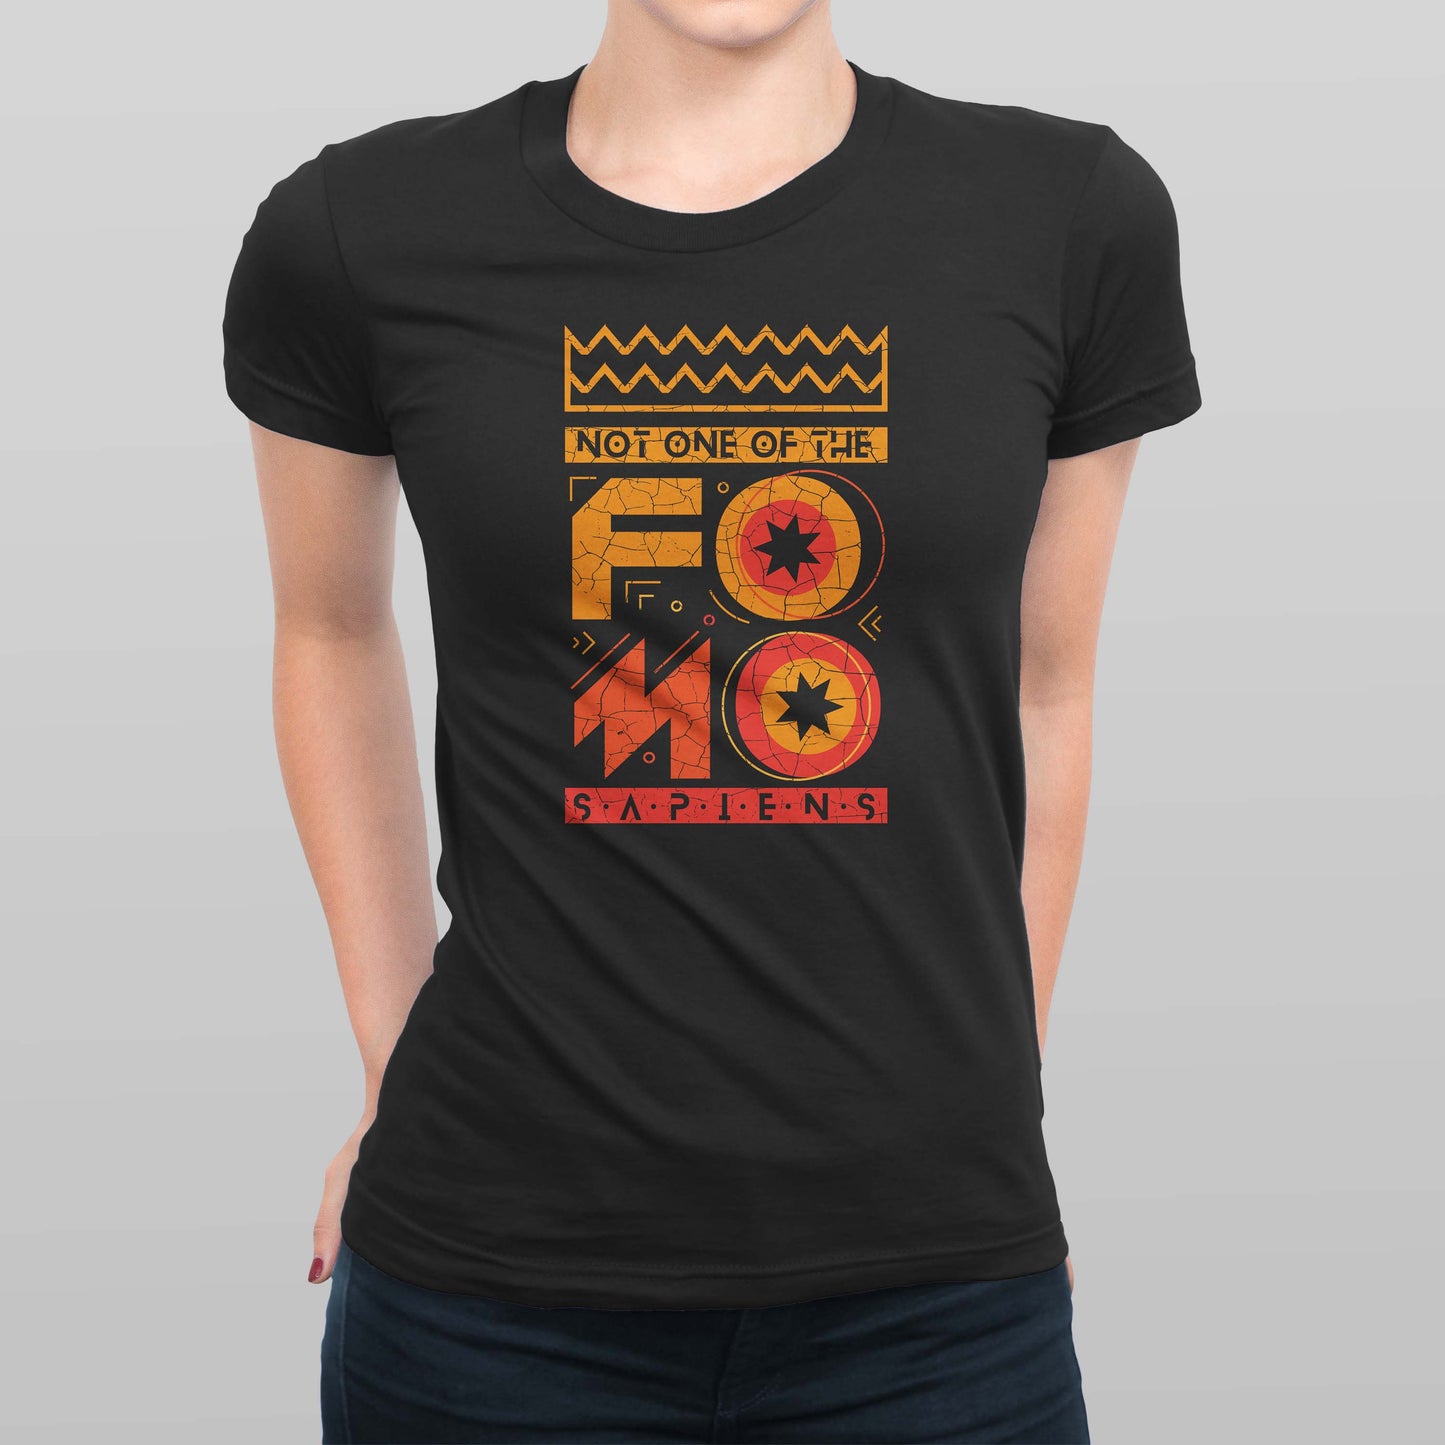 Not One Of The FOMO Sapiens! Women's T-shirt